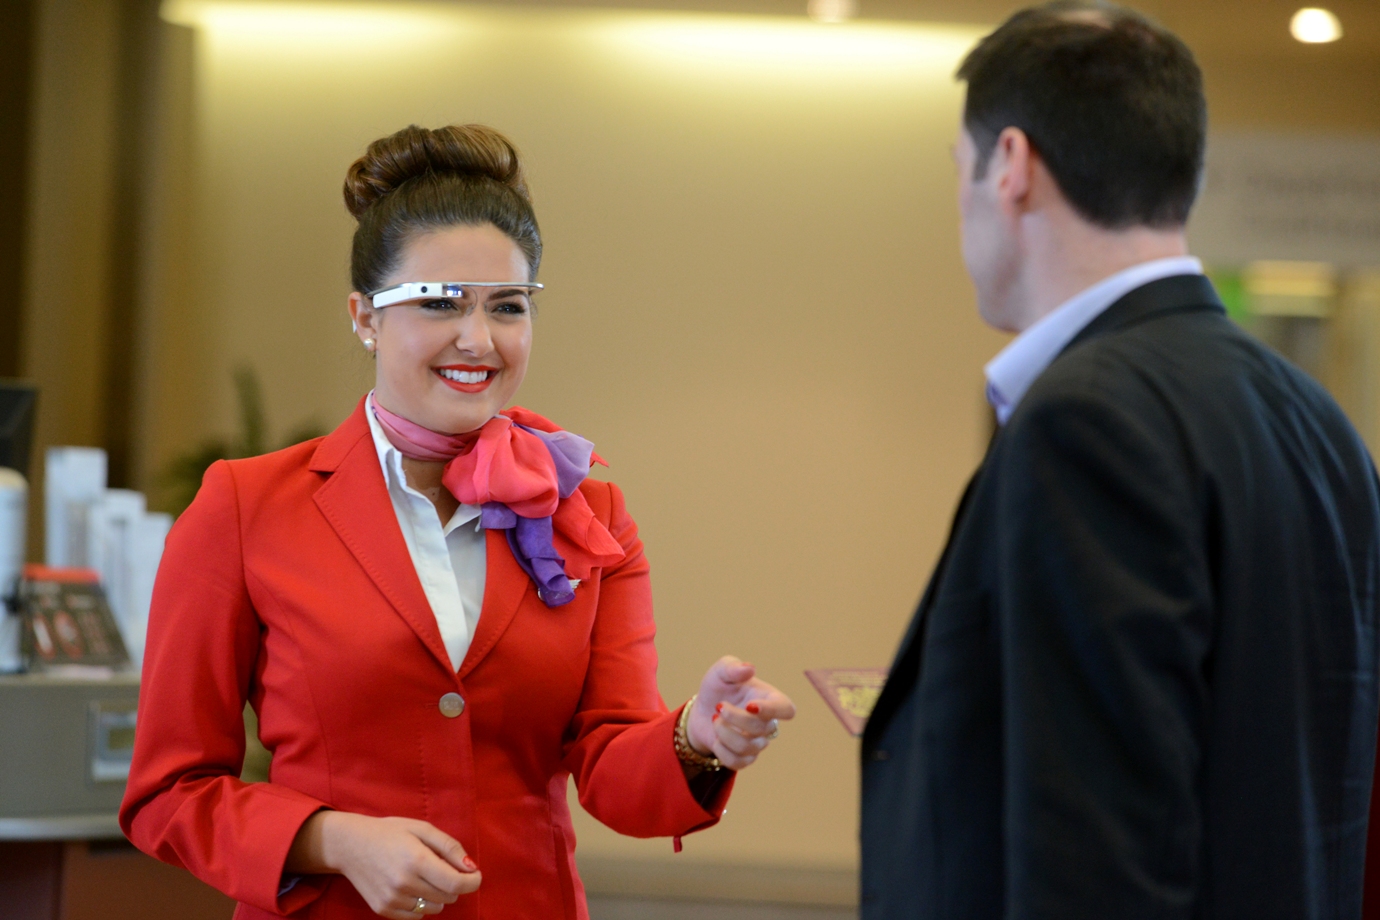 Virgin Atlantic Pilots Google Glass at Heathrow